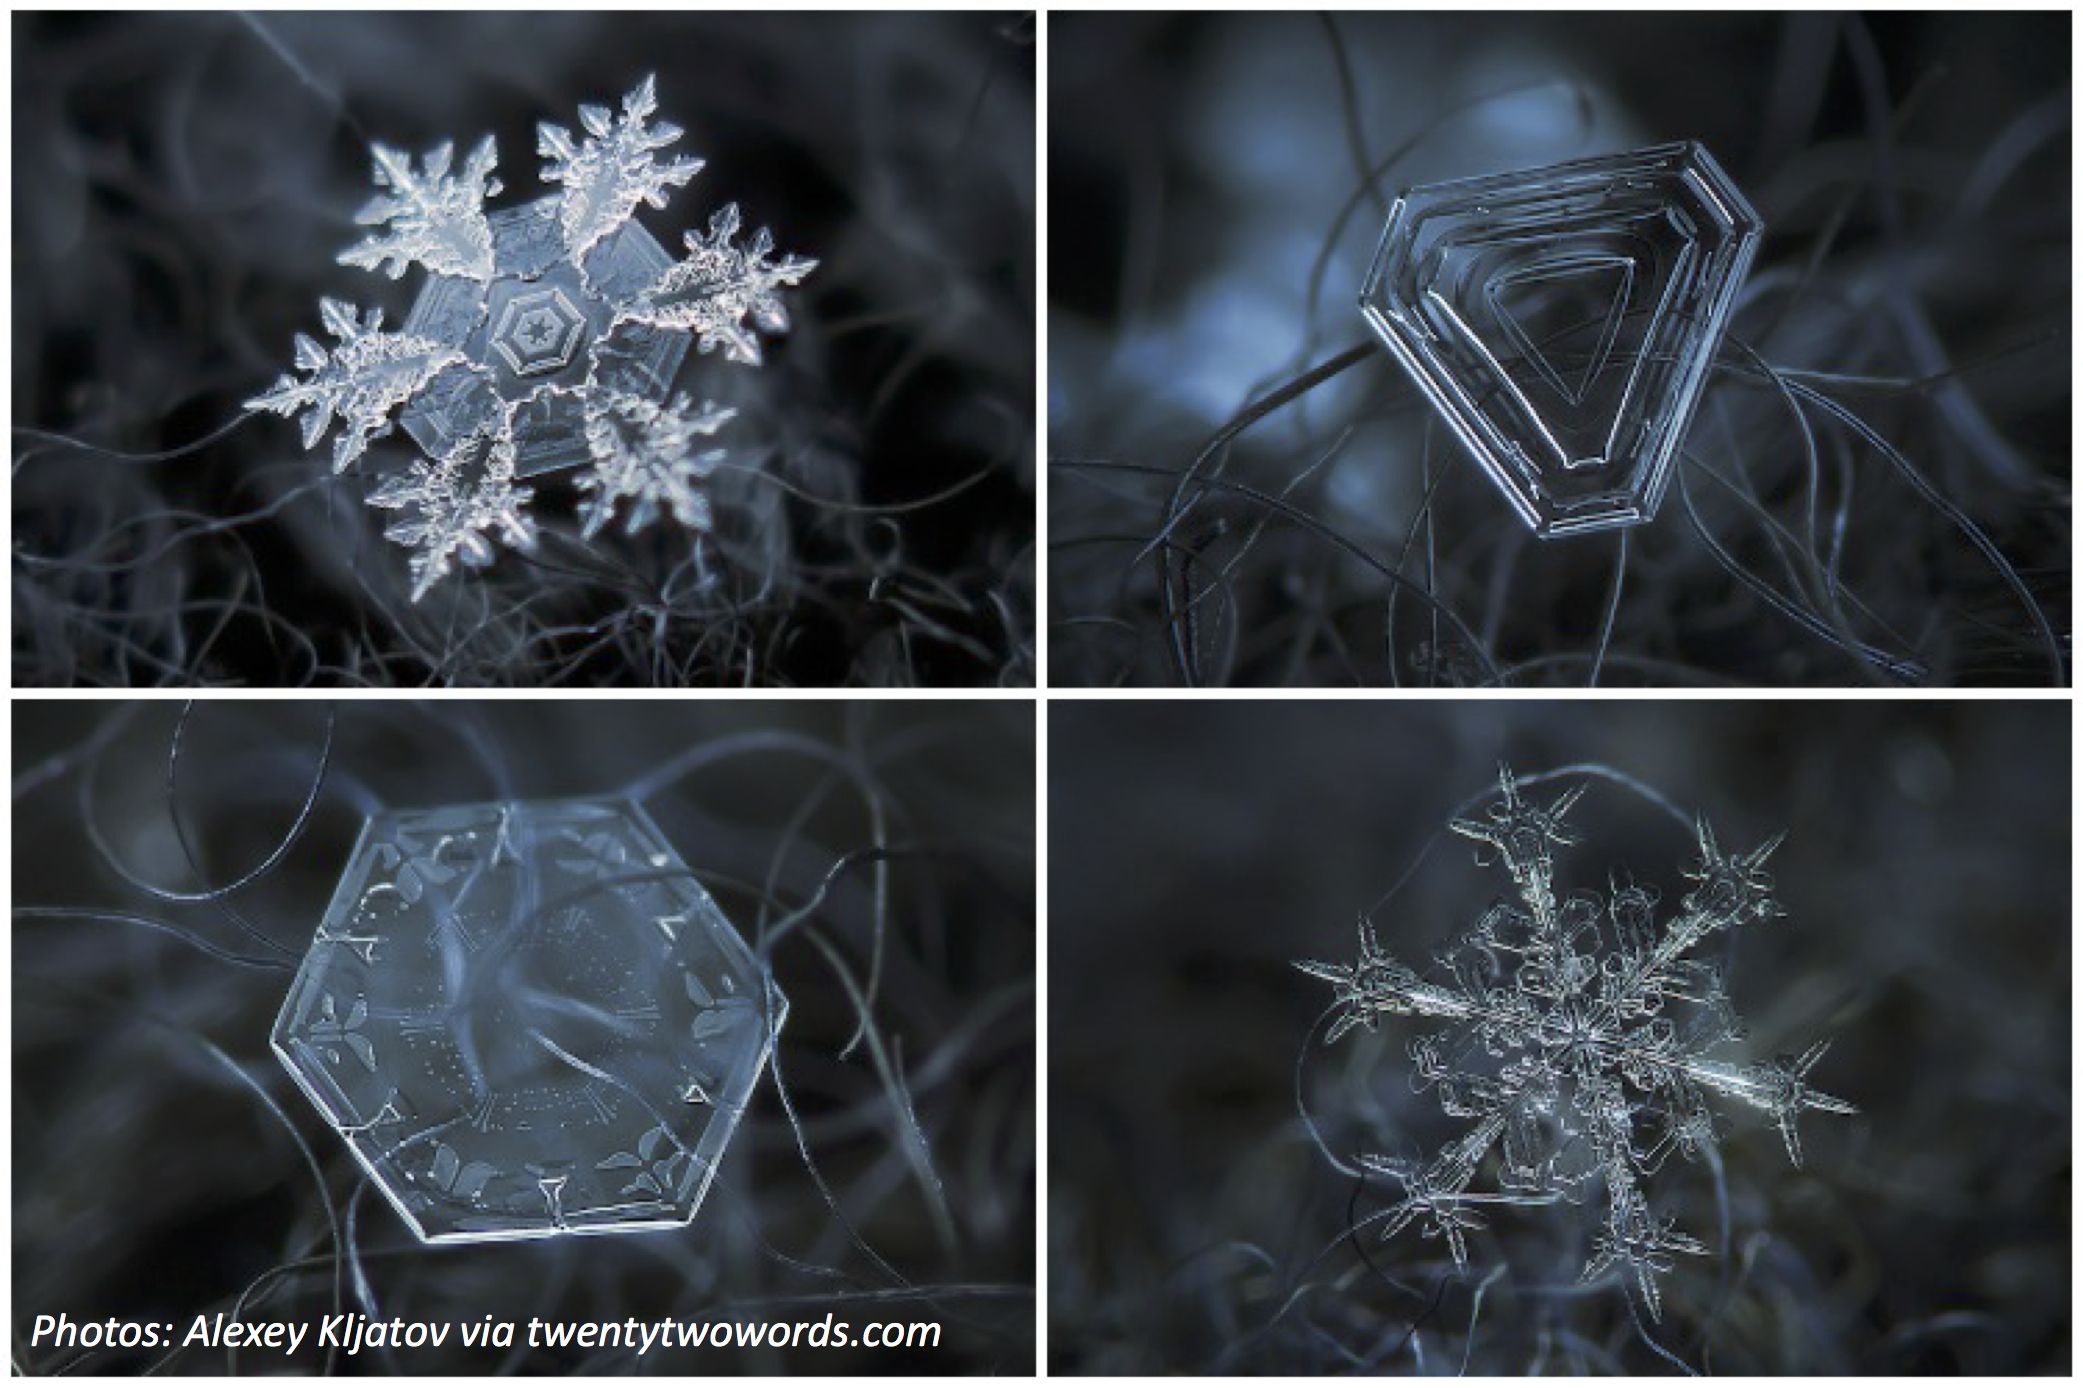 Super-Sized Snowflakes